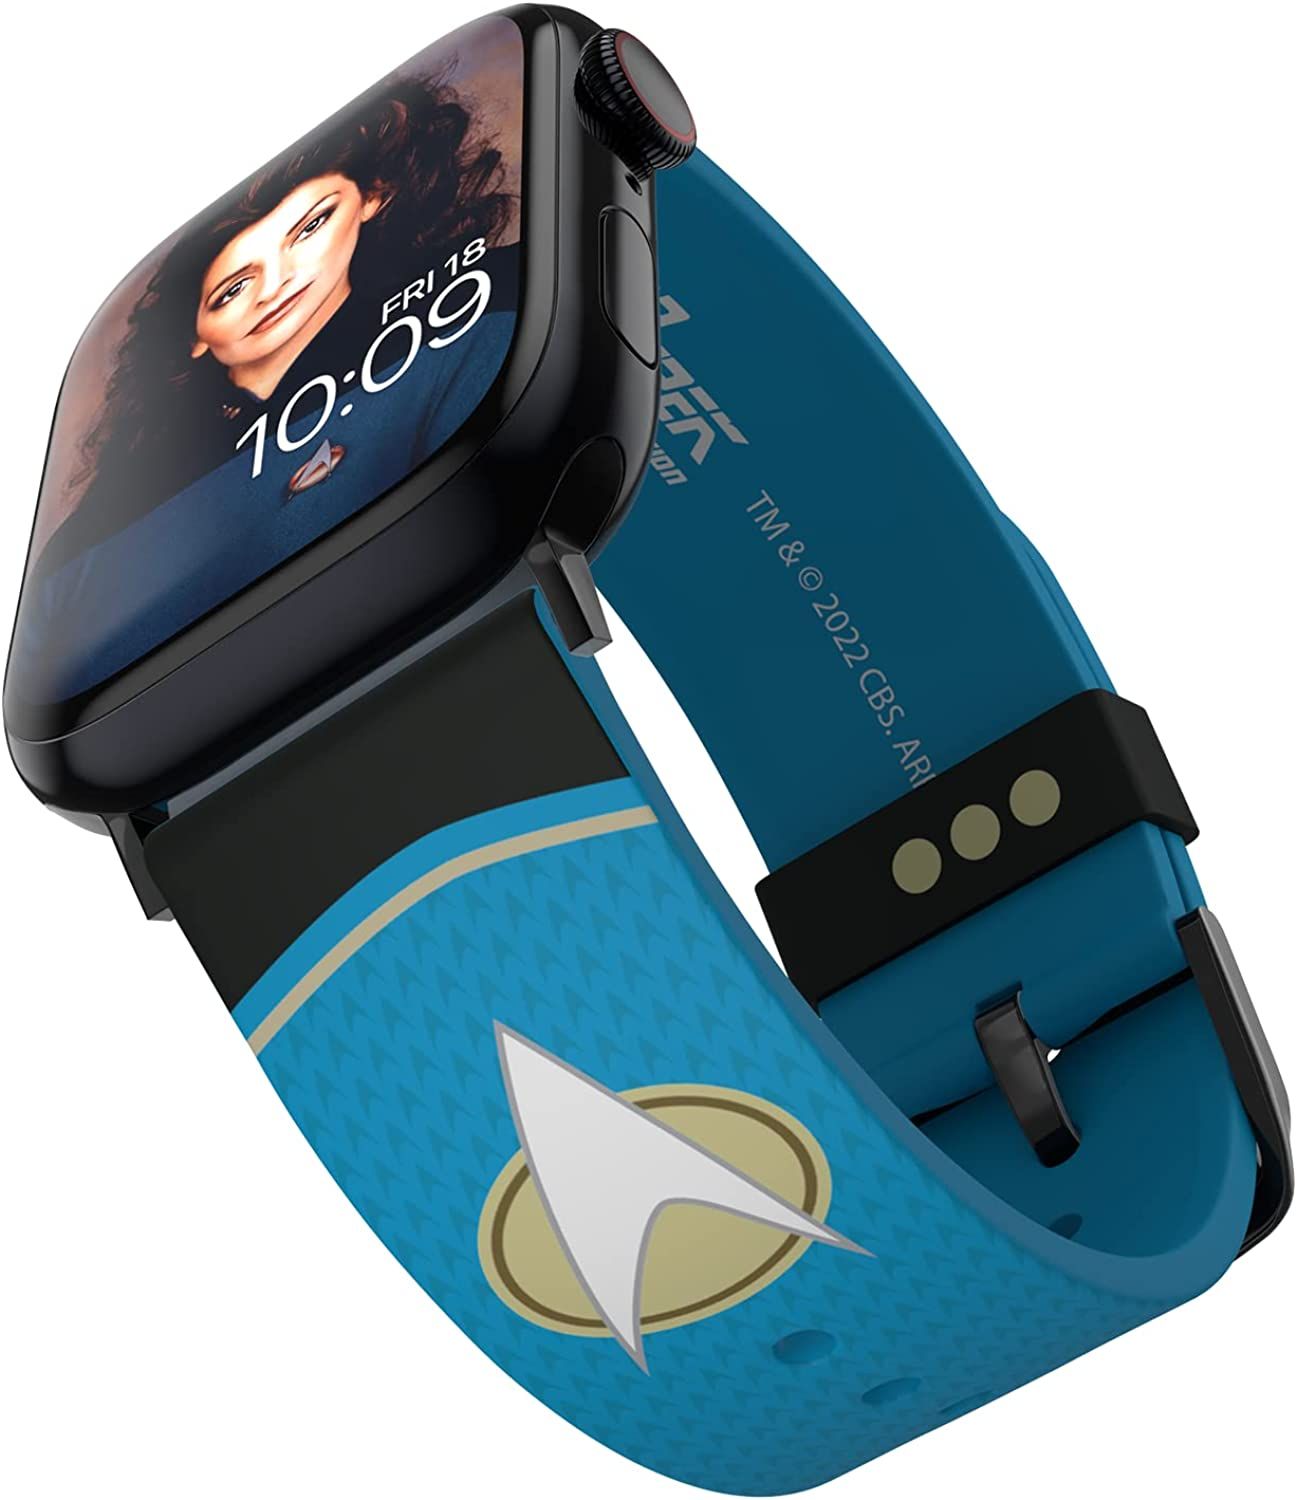 Star Trek Smartwatch Band is one of the best accessories for Star Trek fans